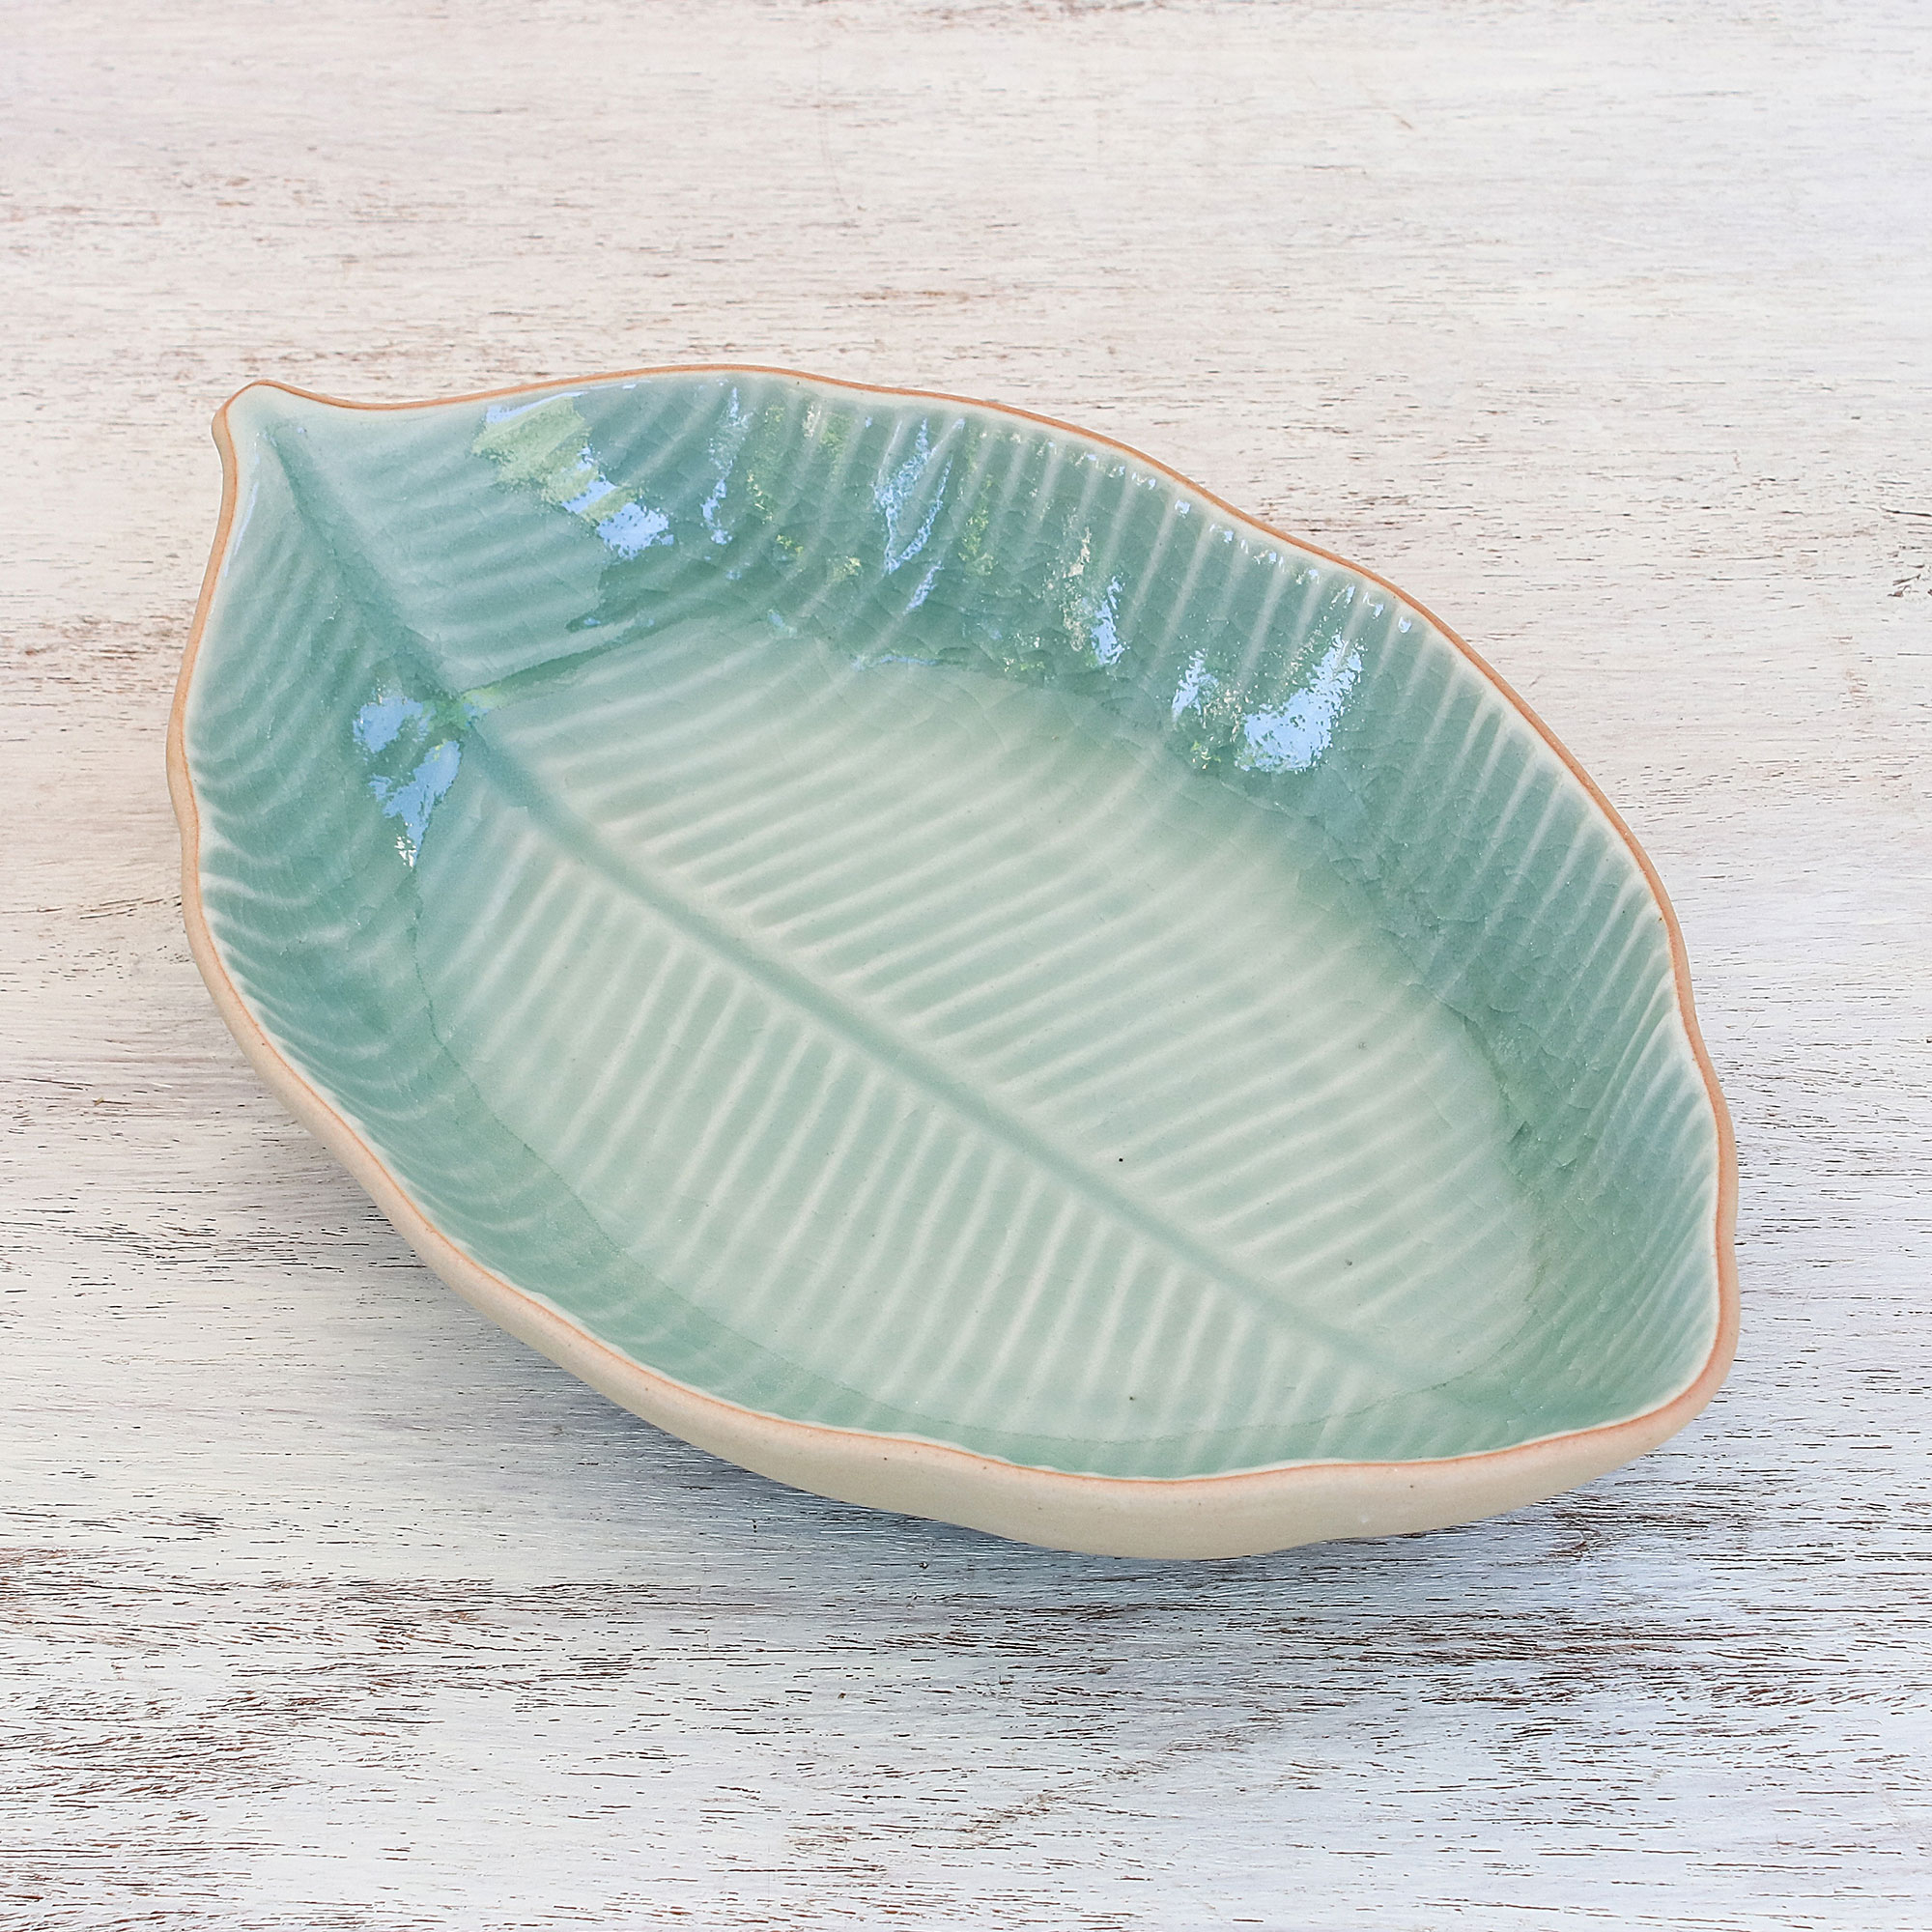 Thai ceramic blue duck shaped serving platter